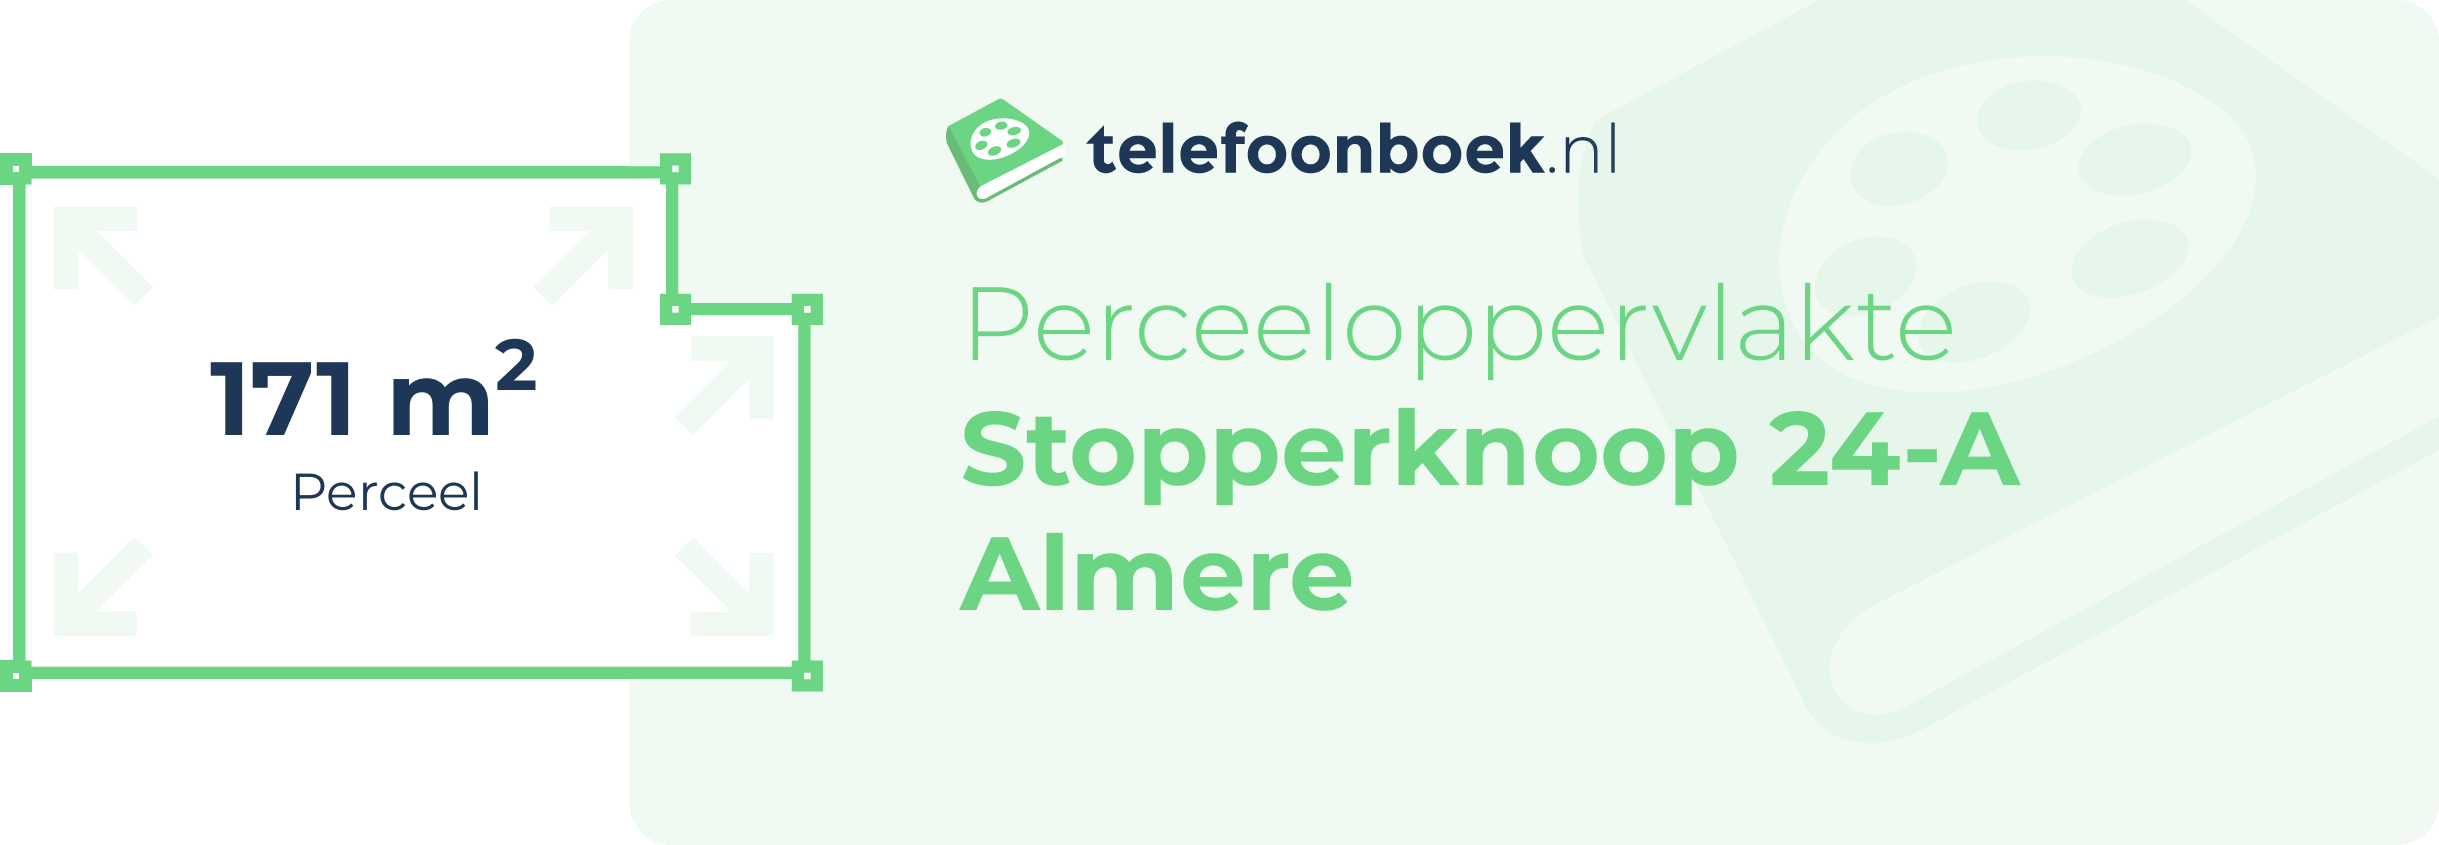 Perceeloppervlakte Stopperknoop 24-A Almere